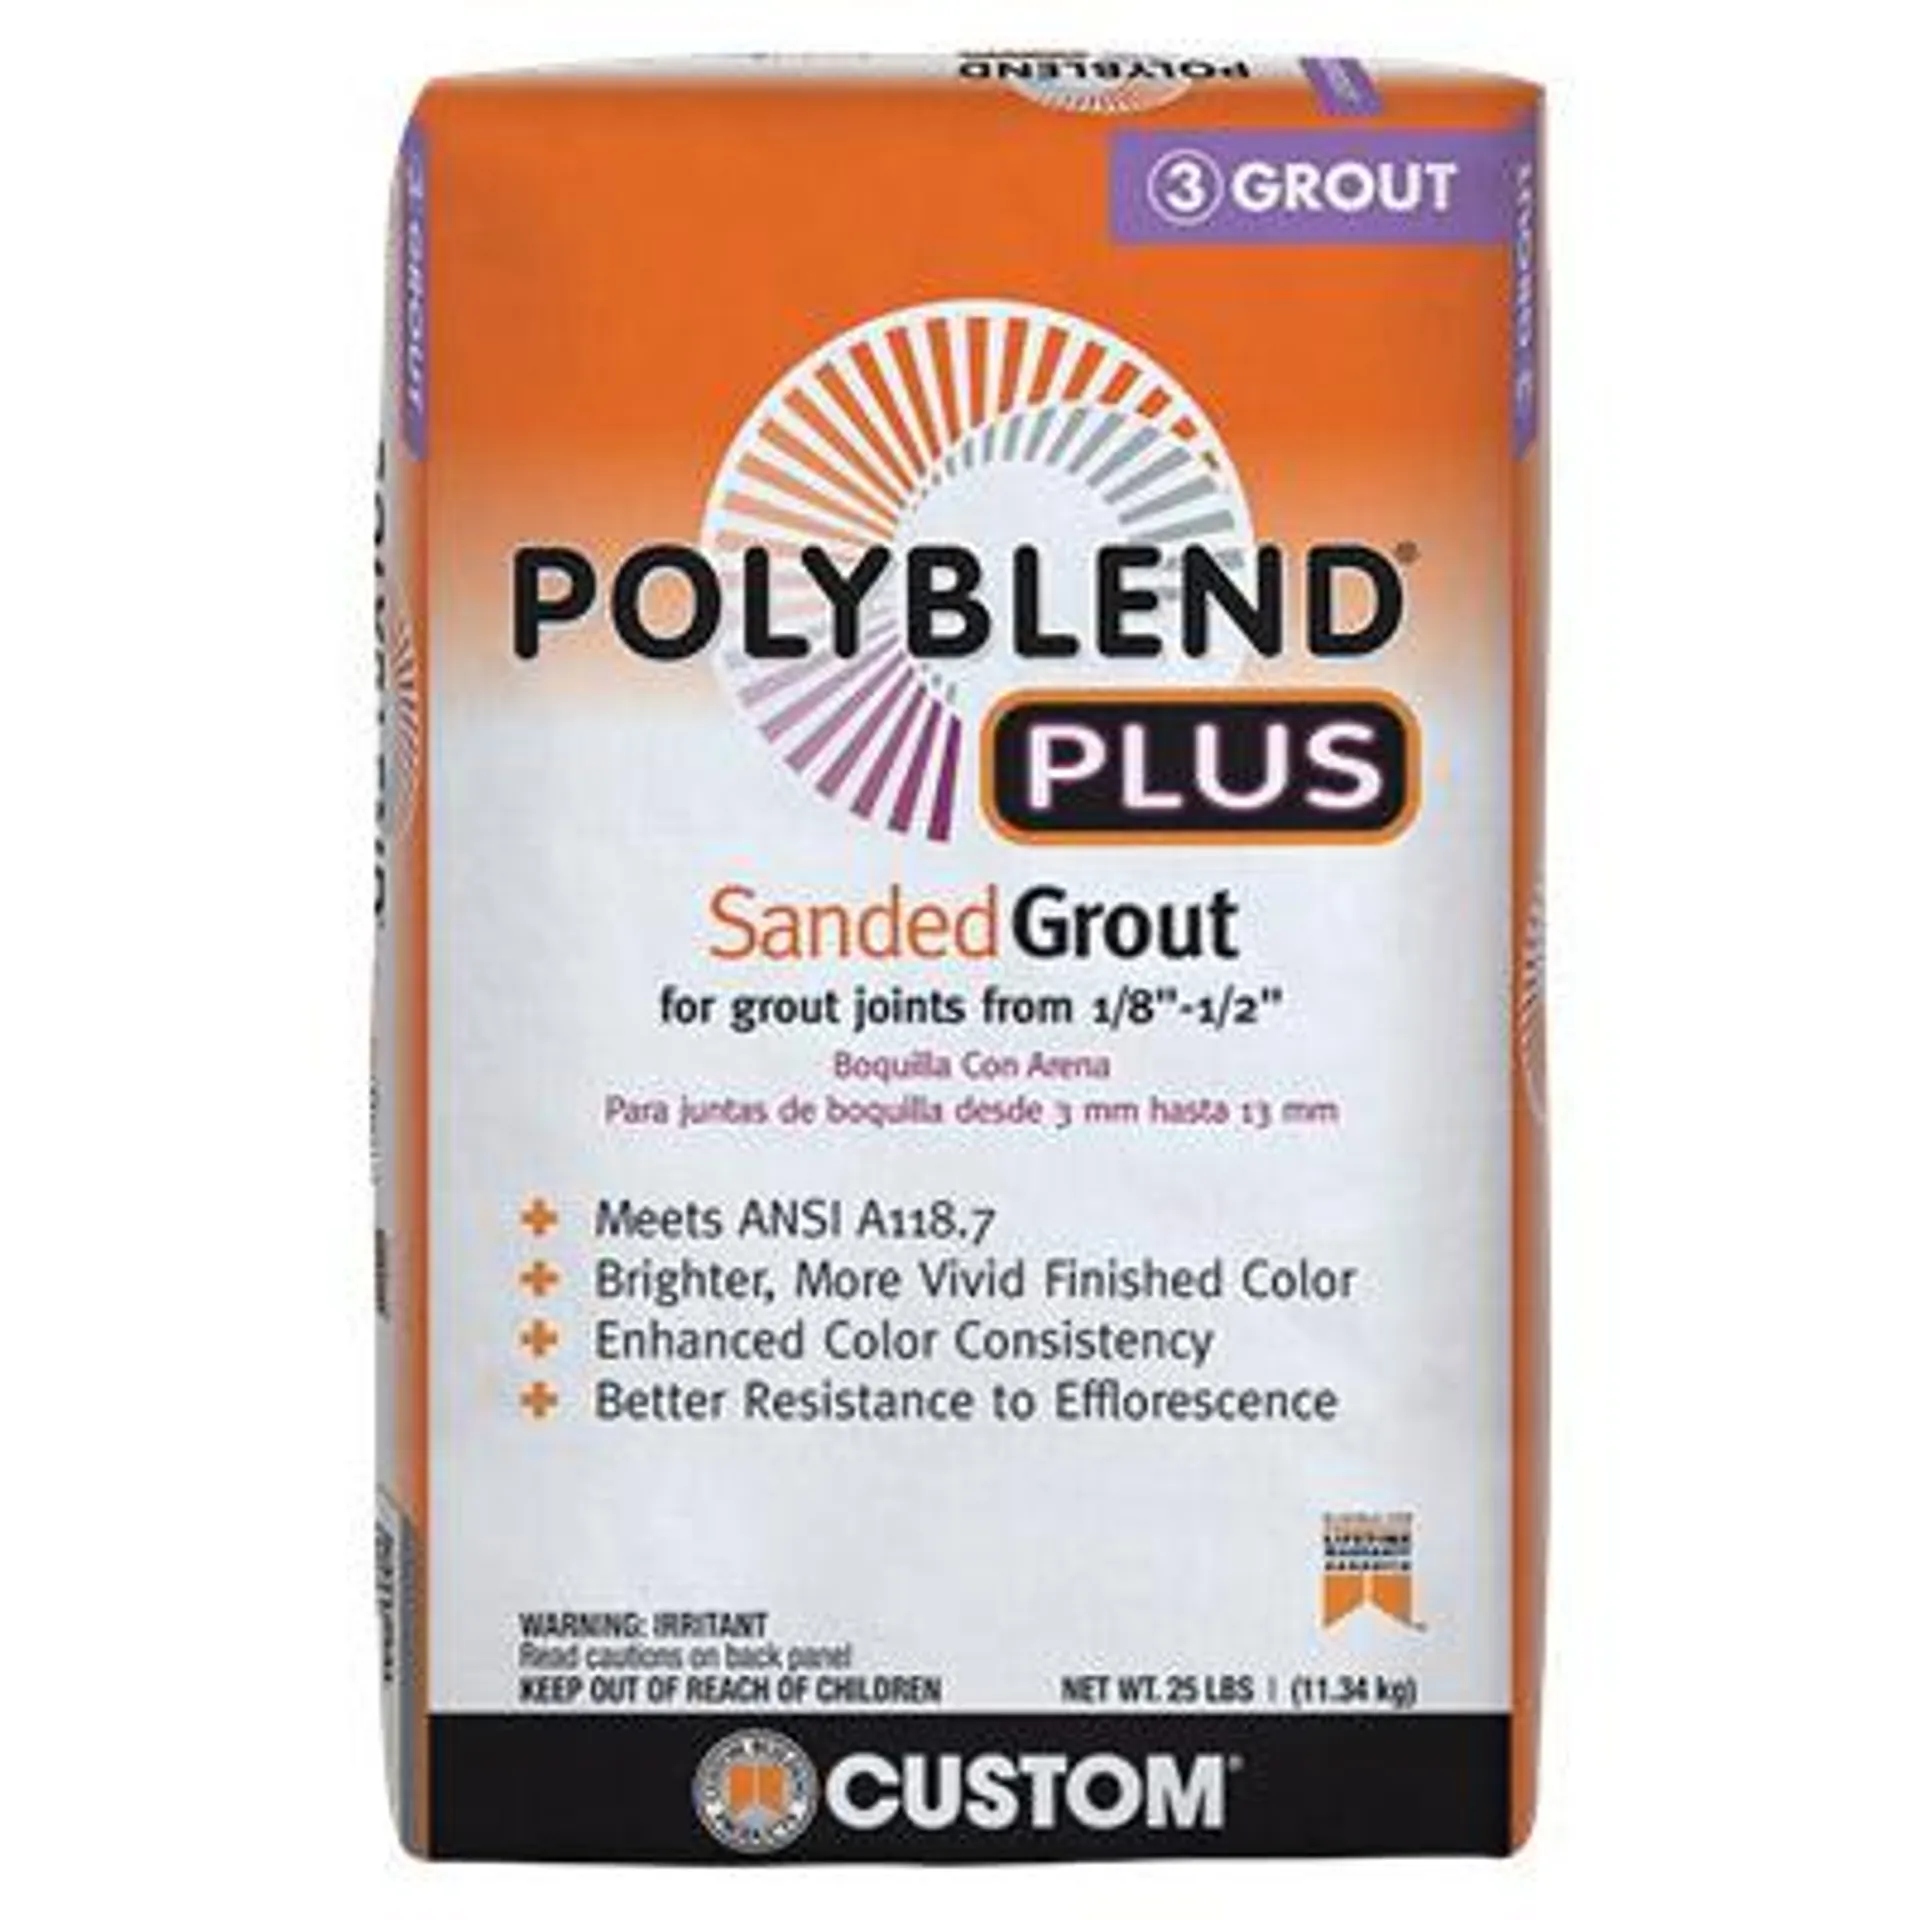 Polyblend Plus PBPG16525 Sanded Grout, Powder, Characteristic, Delorean Gray, 25 lb Bag